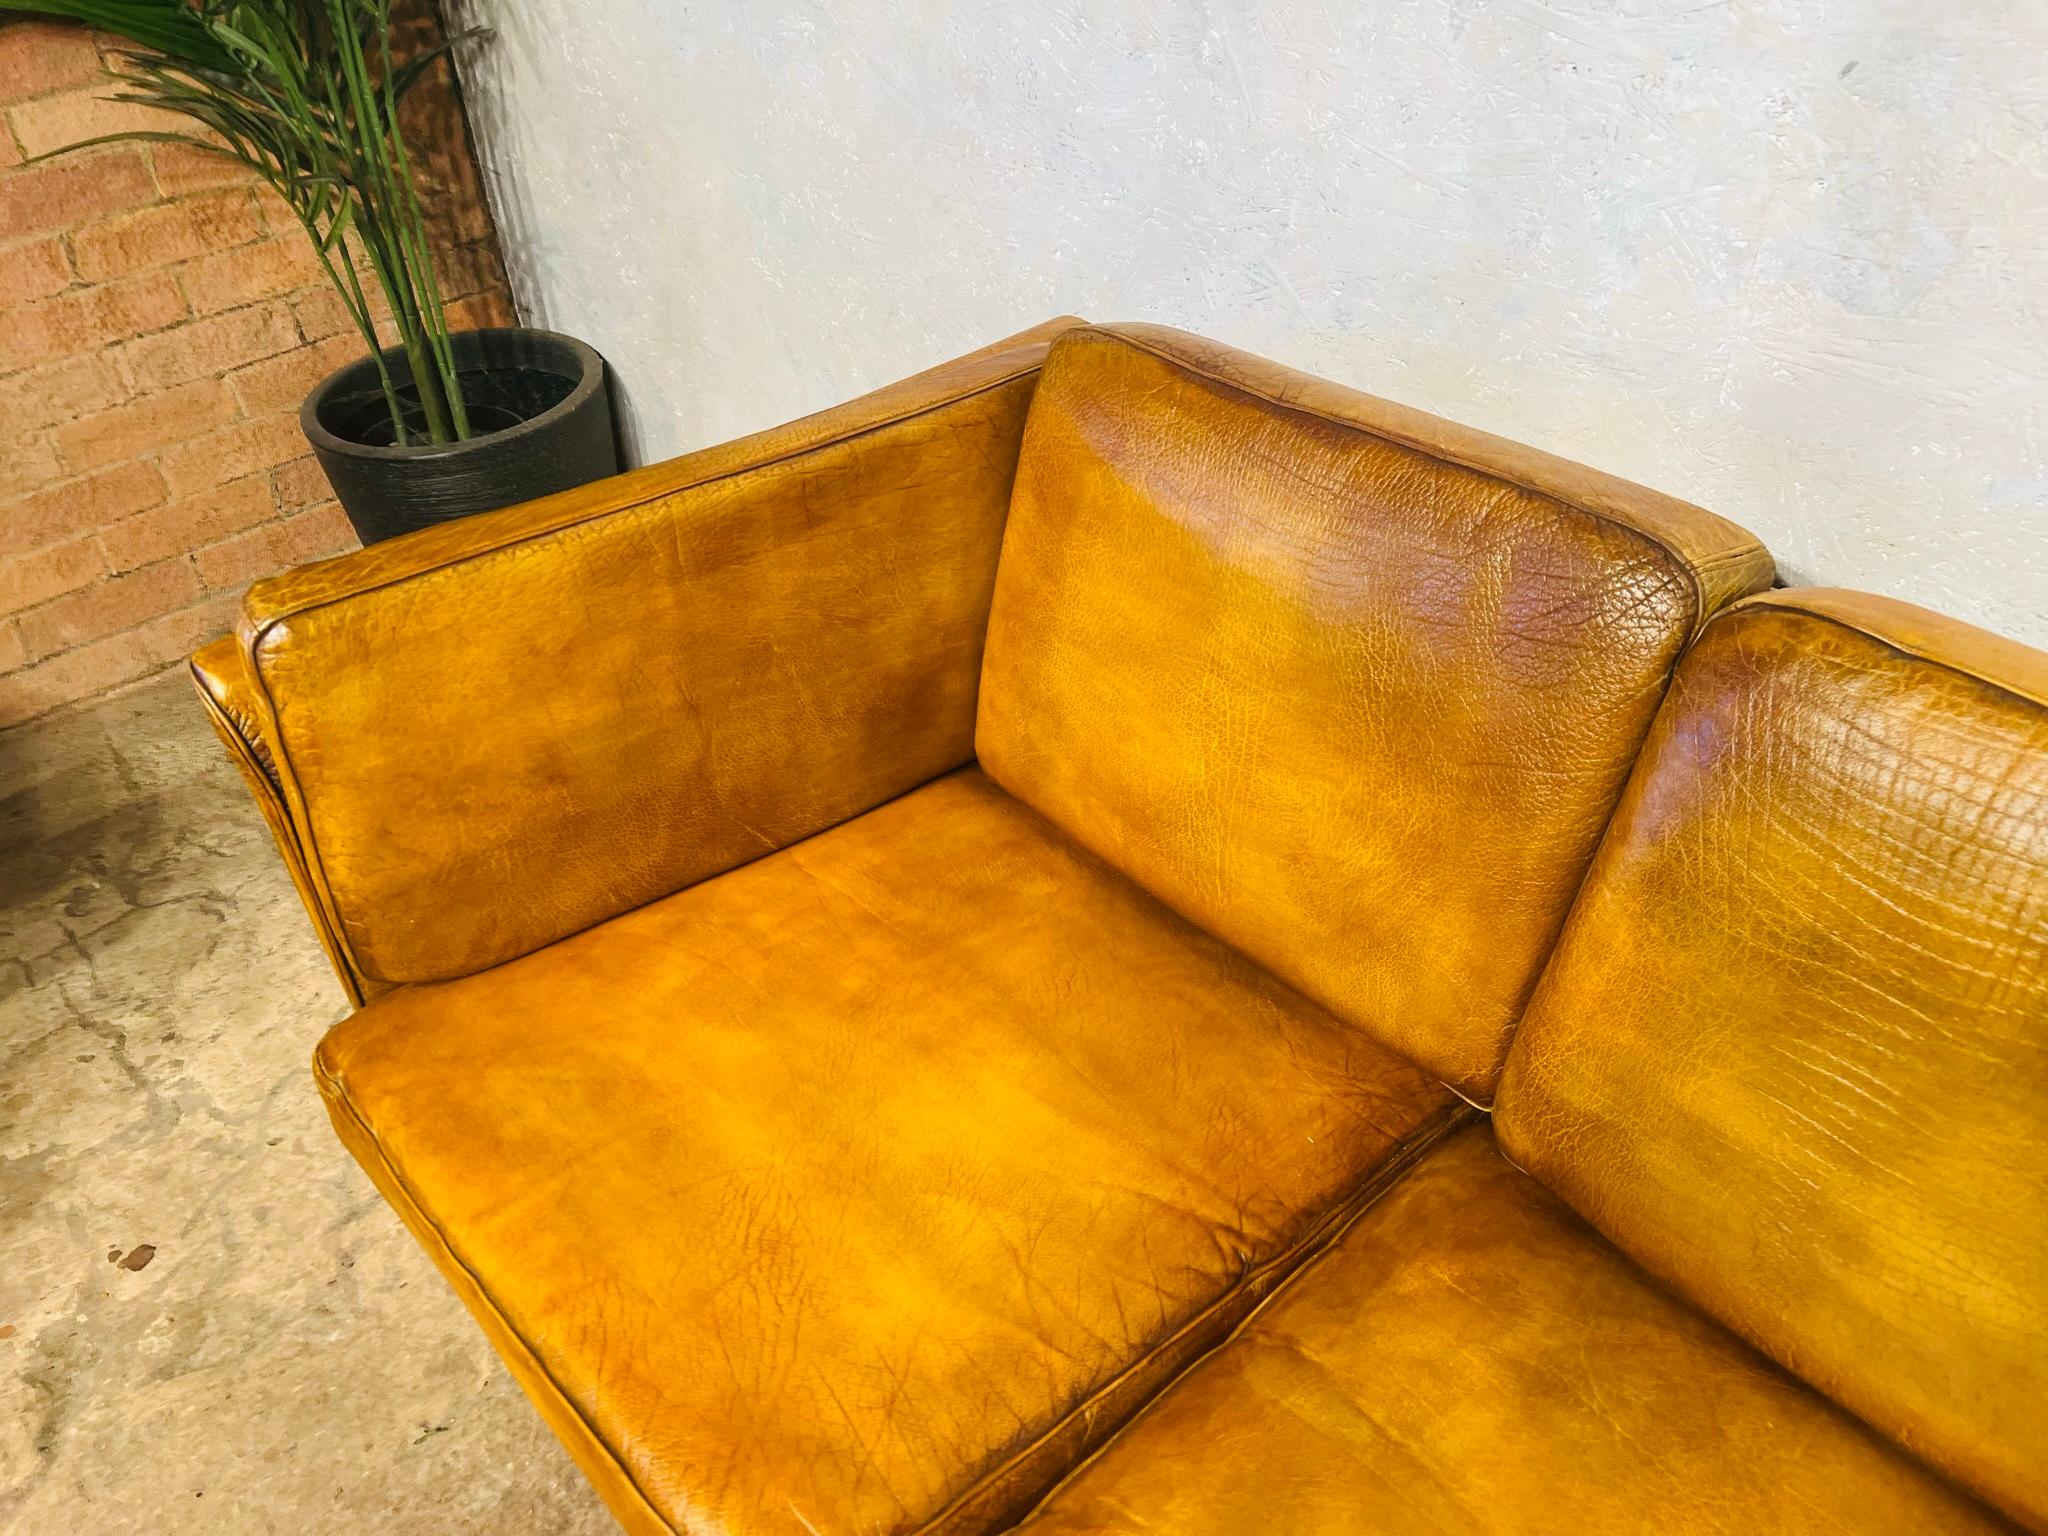 1970s sofa